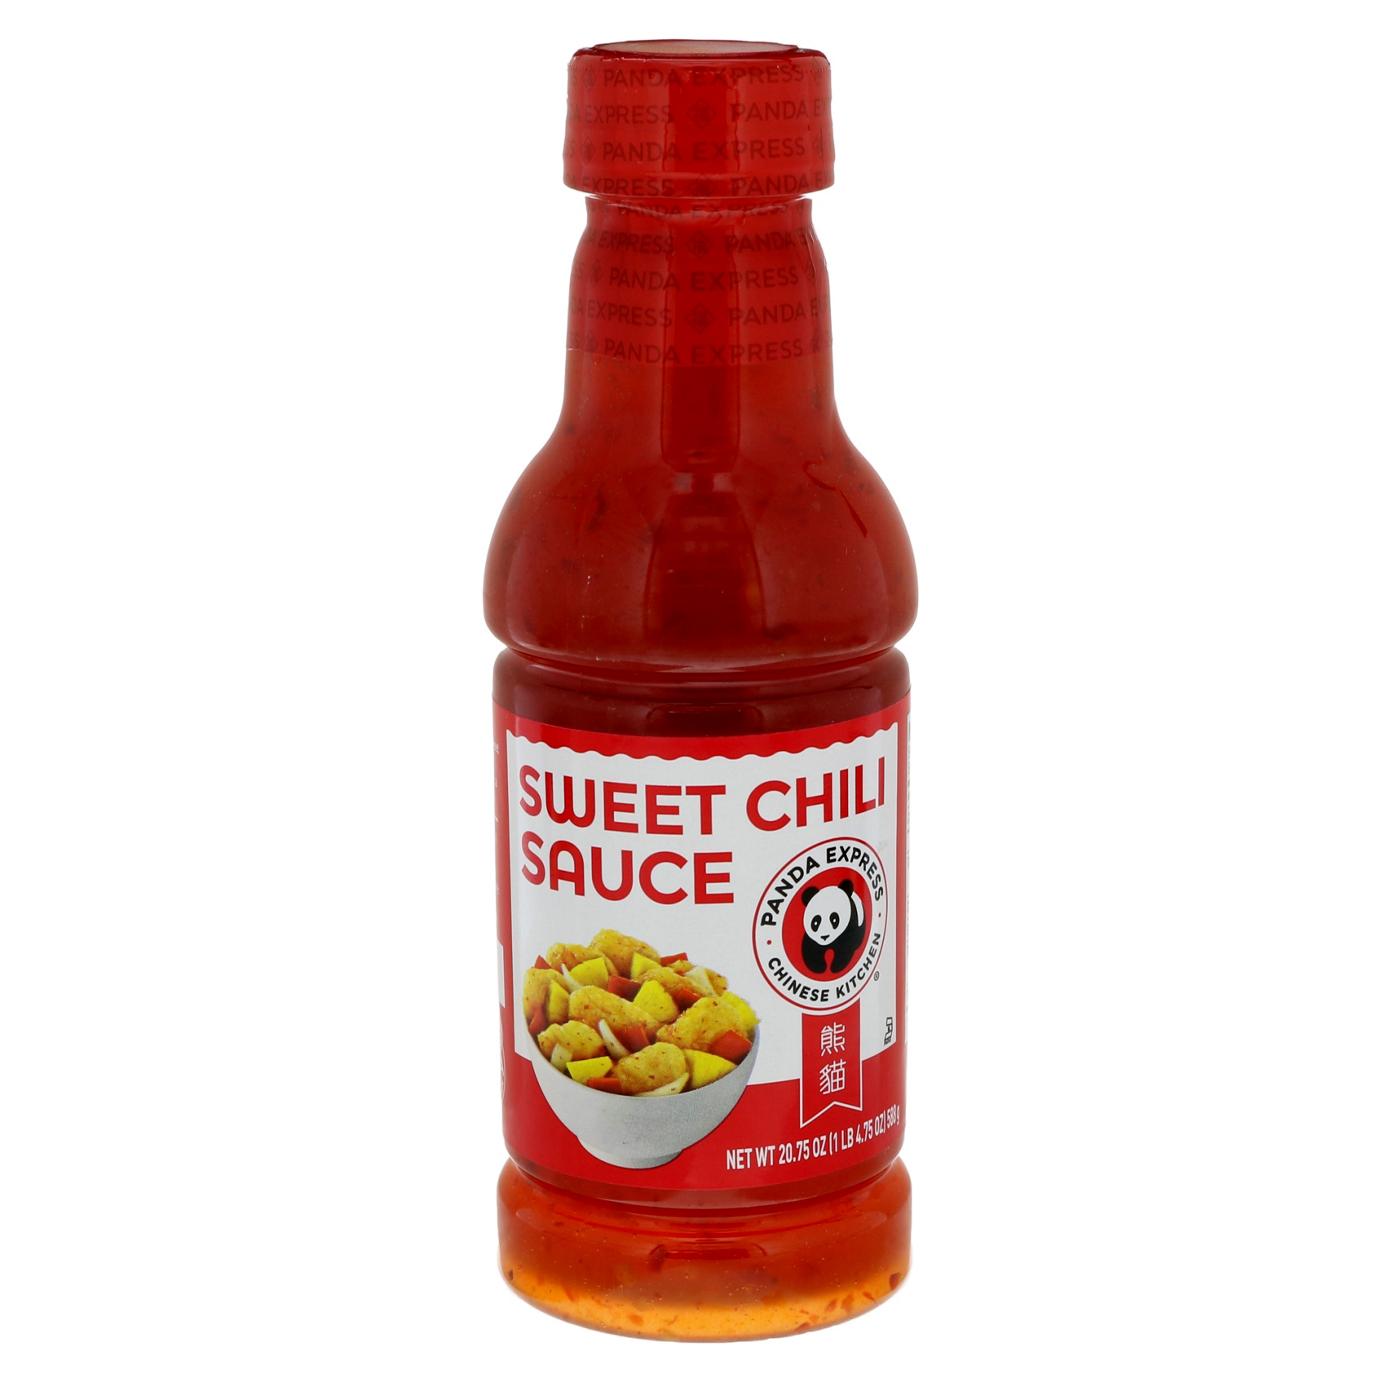 Panda Express Sweet Chili Sauce; image 1 of 3